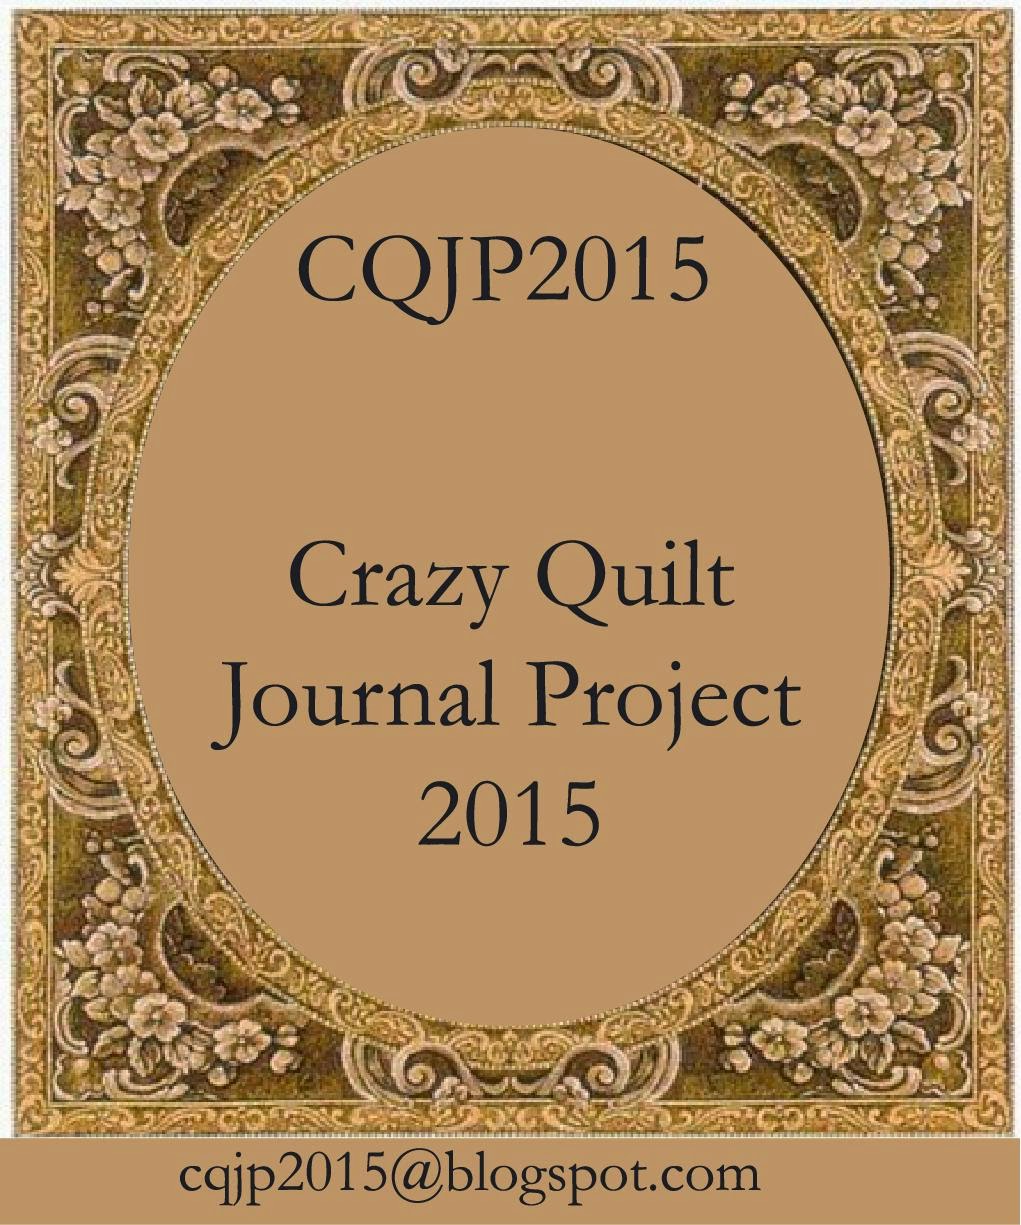 Crazy Quilt Journal Project 2015